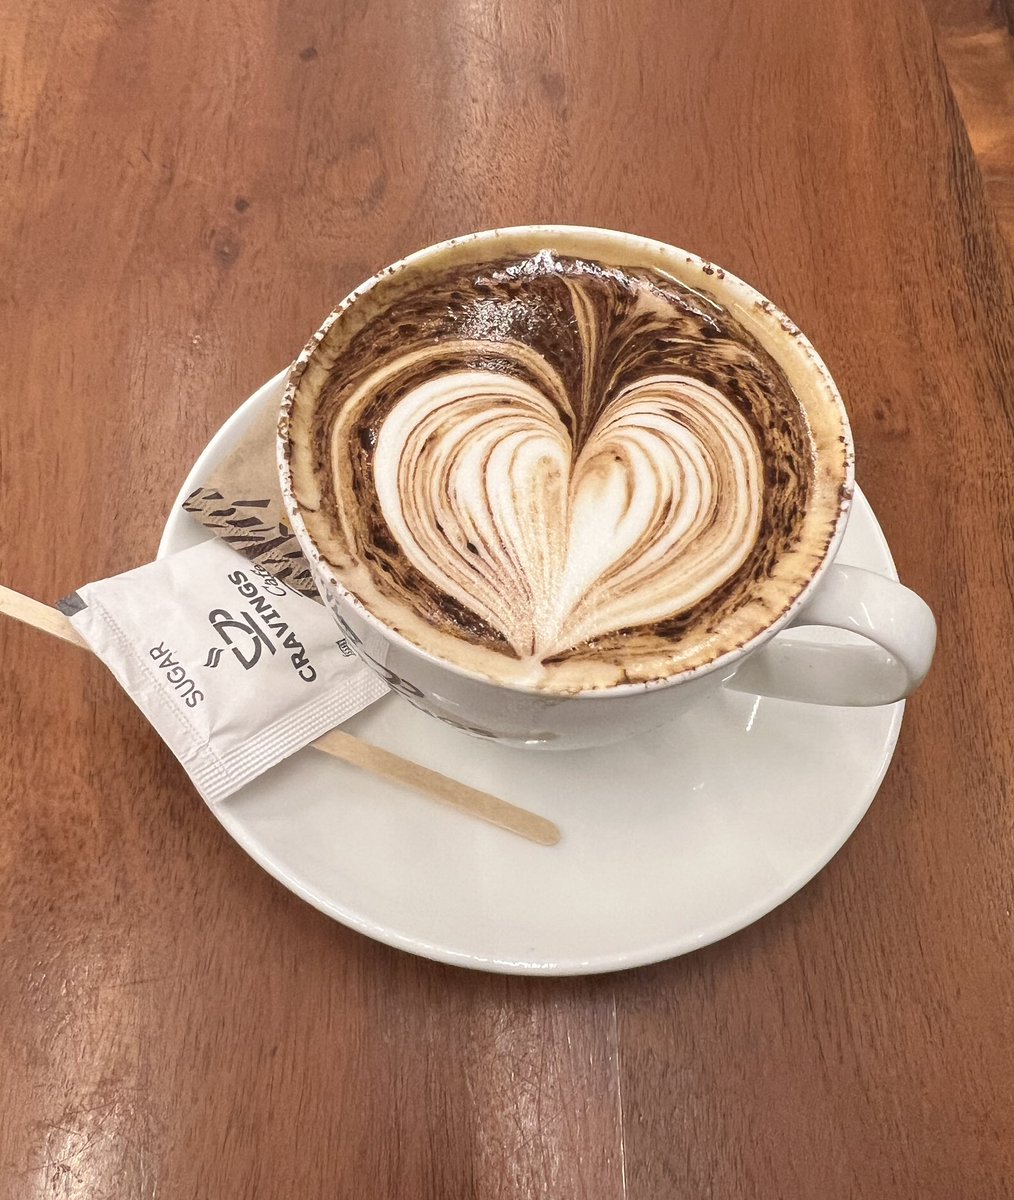 Love 💗 for the Coffee ☕️ is inevitable. 

#coffeeholic #coffeelover #coffeetime #coffeebreak
#coffeegram #coffeeaddict
#morningcoffee #coffeeshopvibes
#coffeeoftheday #coffeelife
#coffeeobsessed #butfirstcoffee
#coffeemug #coffeeroasters
#coffeeandfriends #coffeebeans…